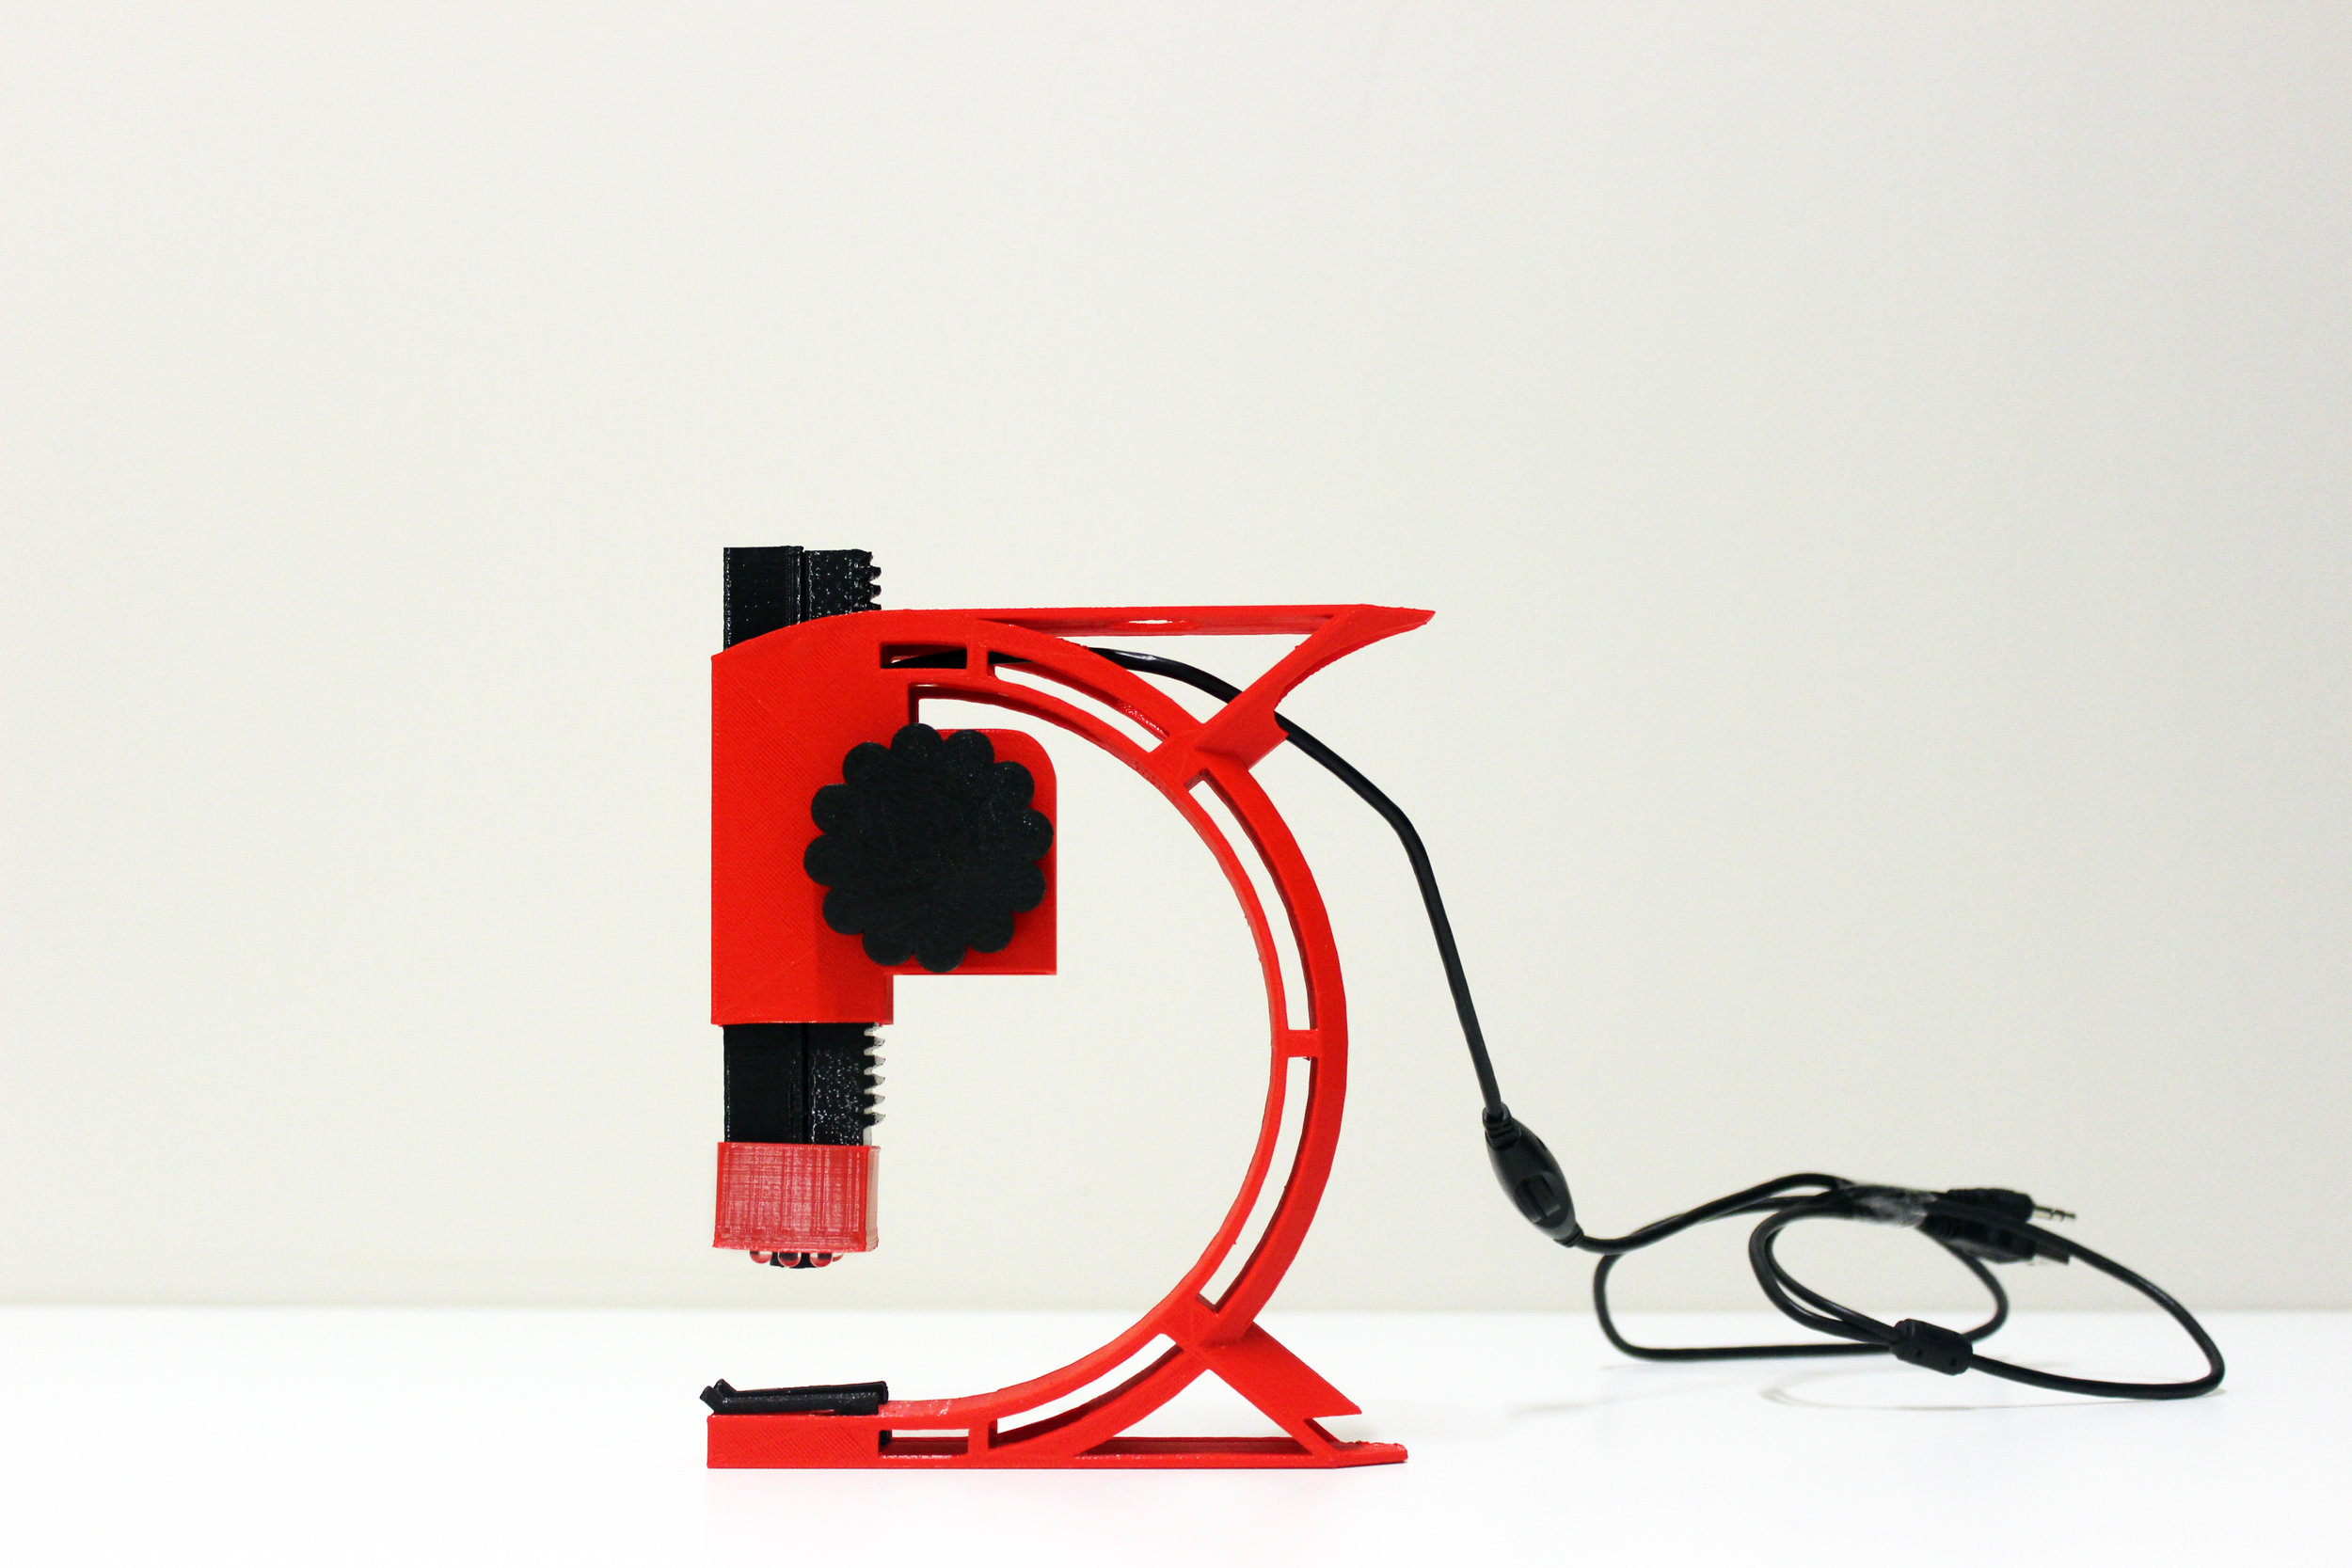  The 3D printed Box Microscope 